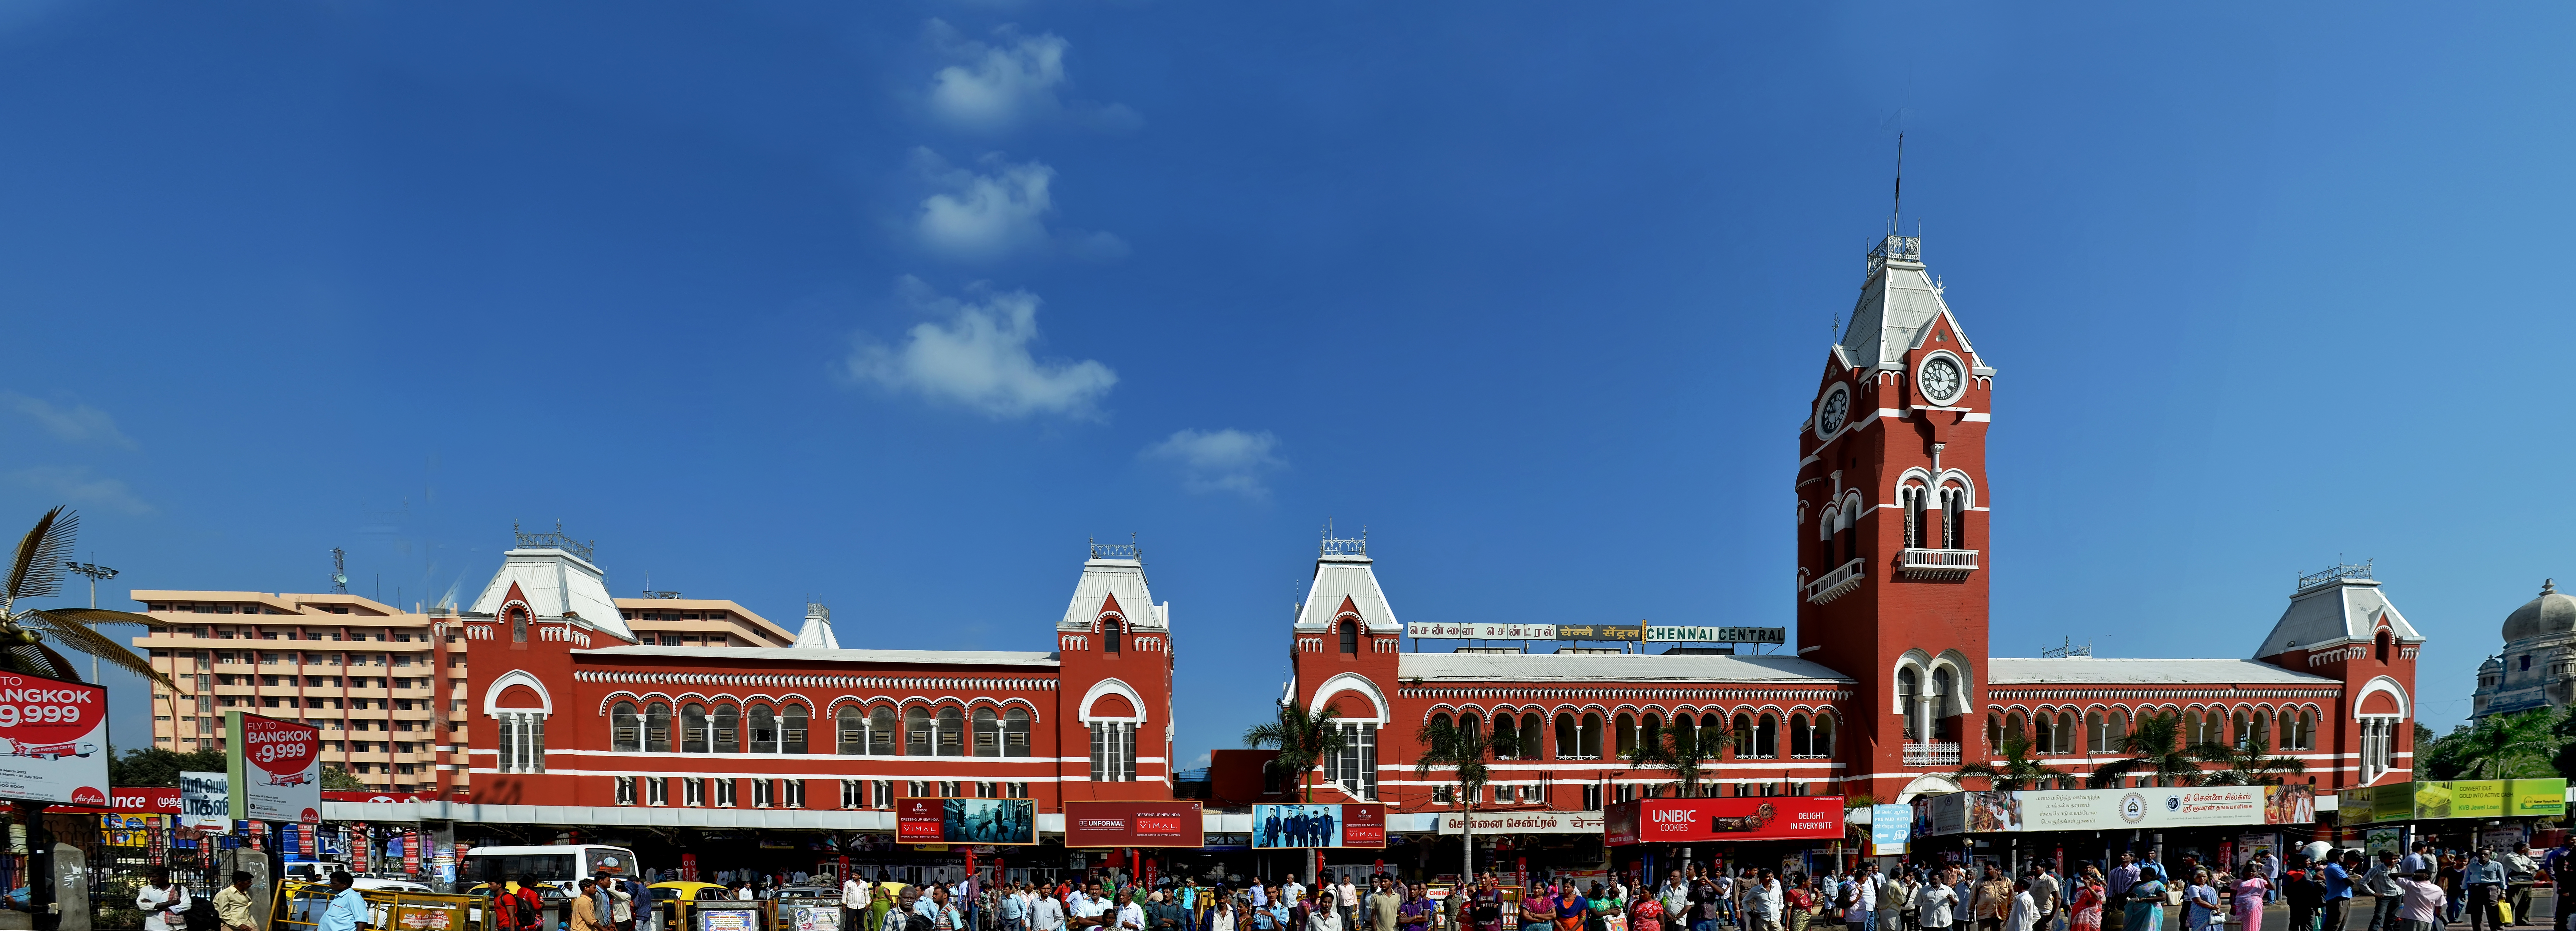 Chennai Central Railway Station Wikipedia